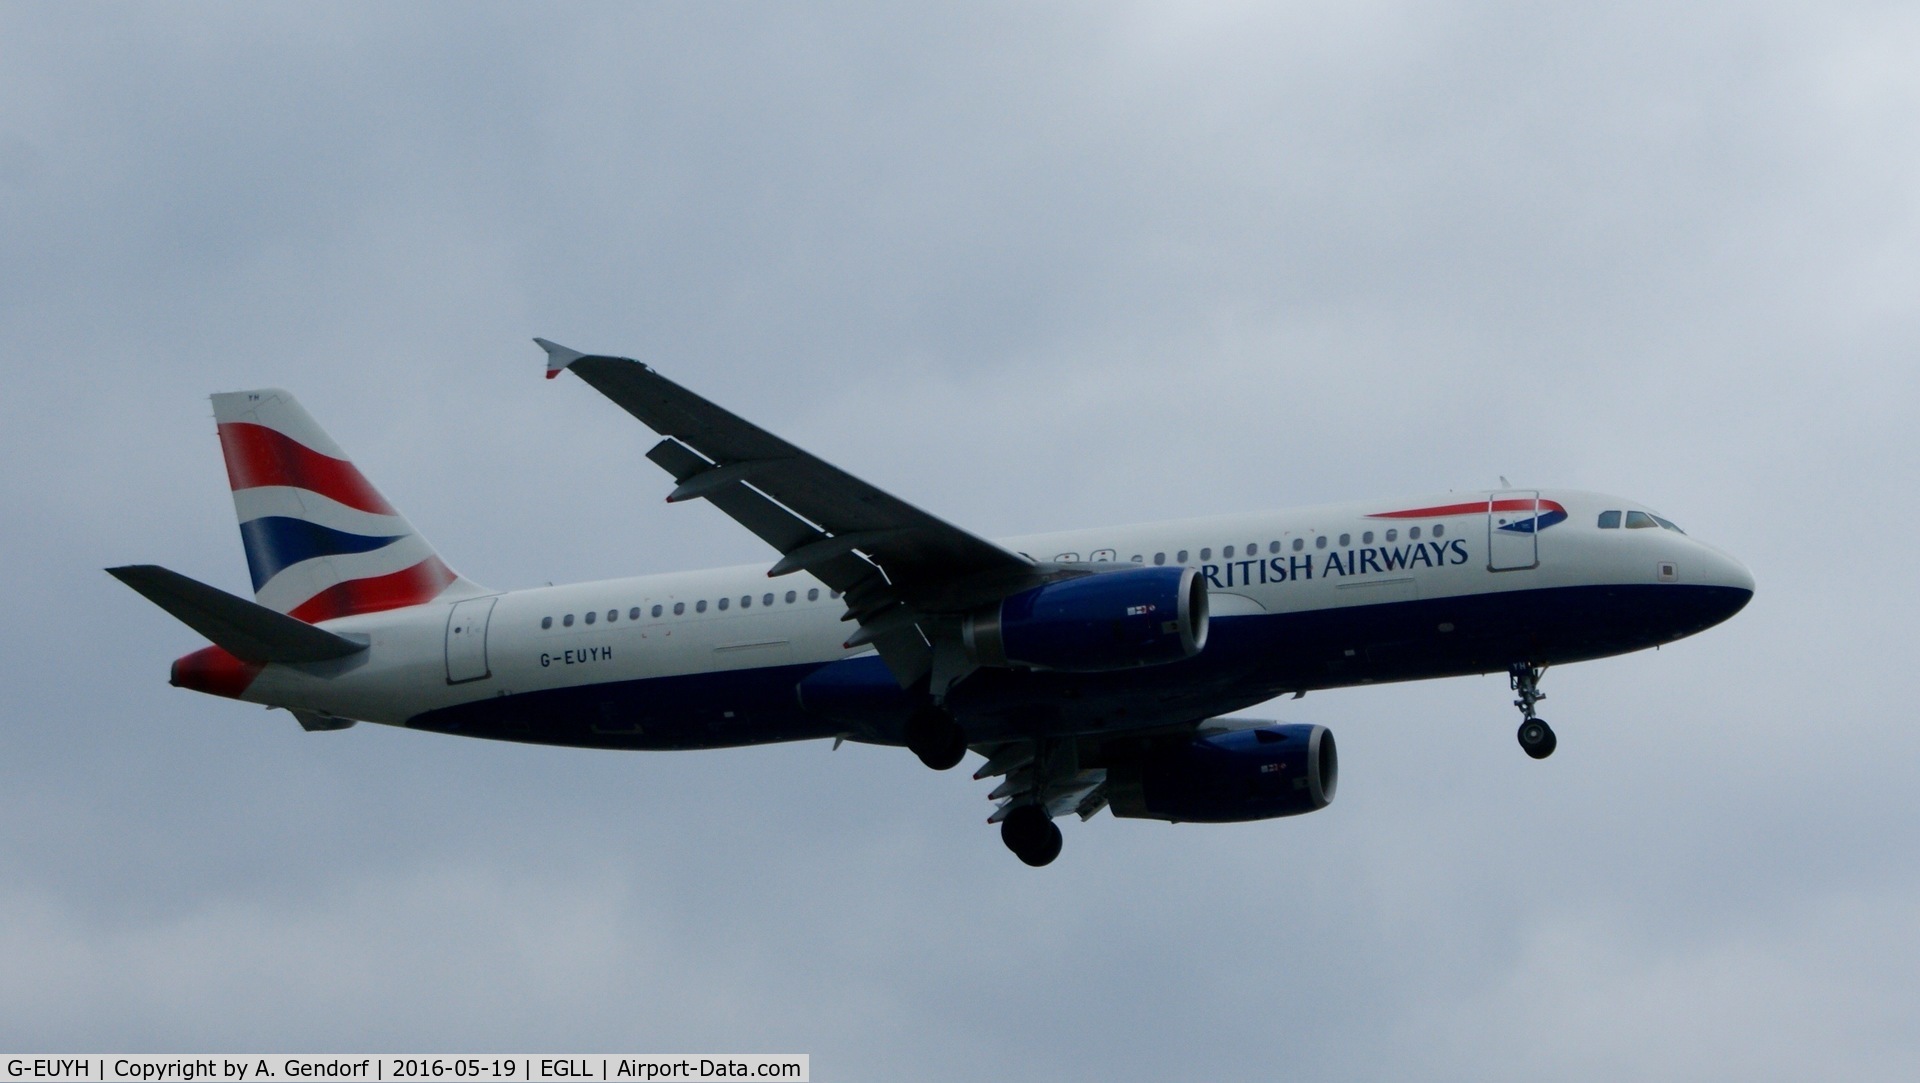 G-EUYH, 2010 Airbus A320-232 C/N 4265, British Airways, seen here landing on RWY 27R at London Heathrow(EGLL)